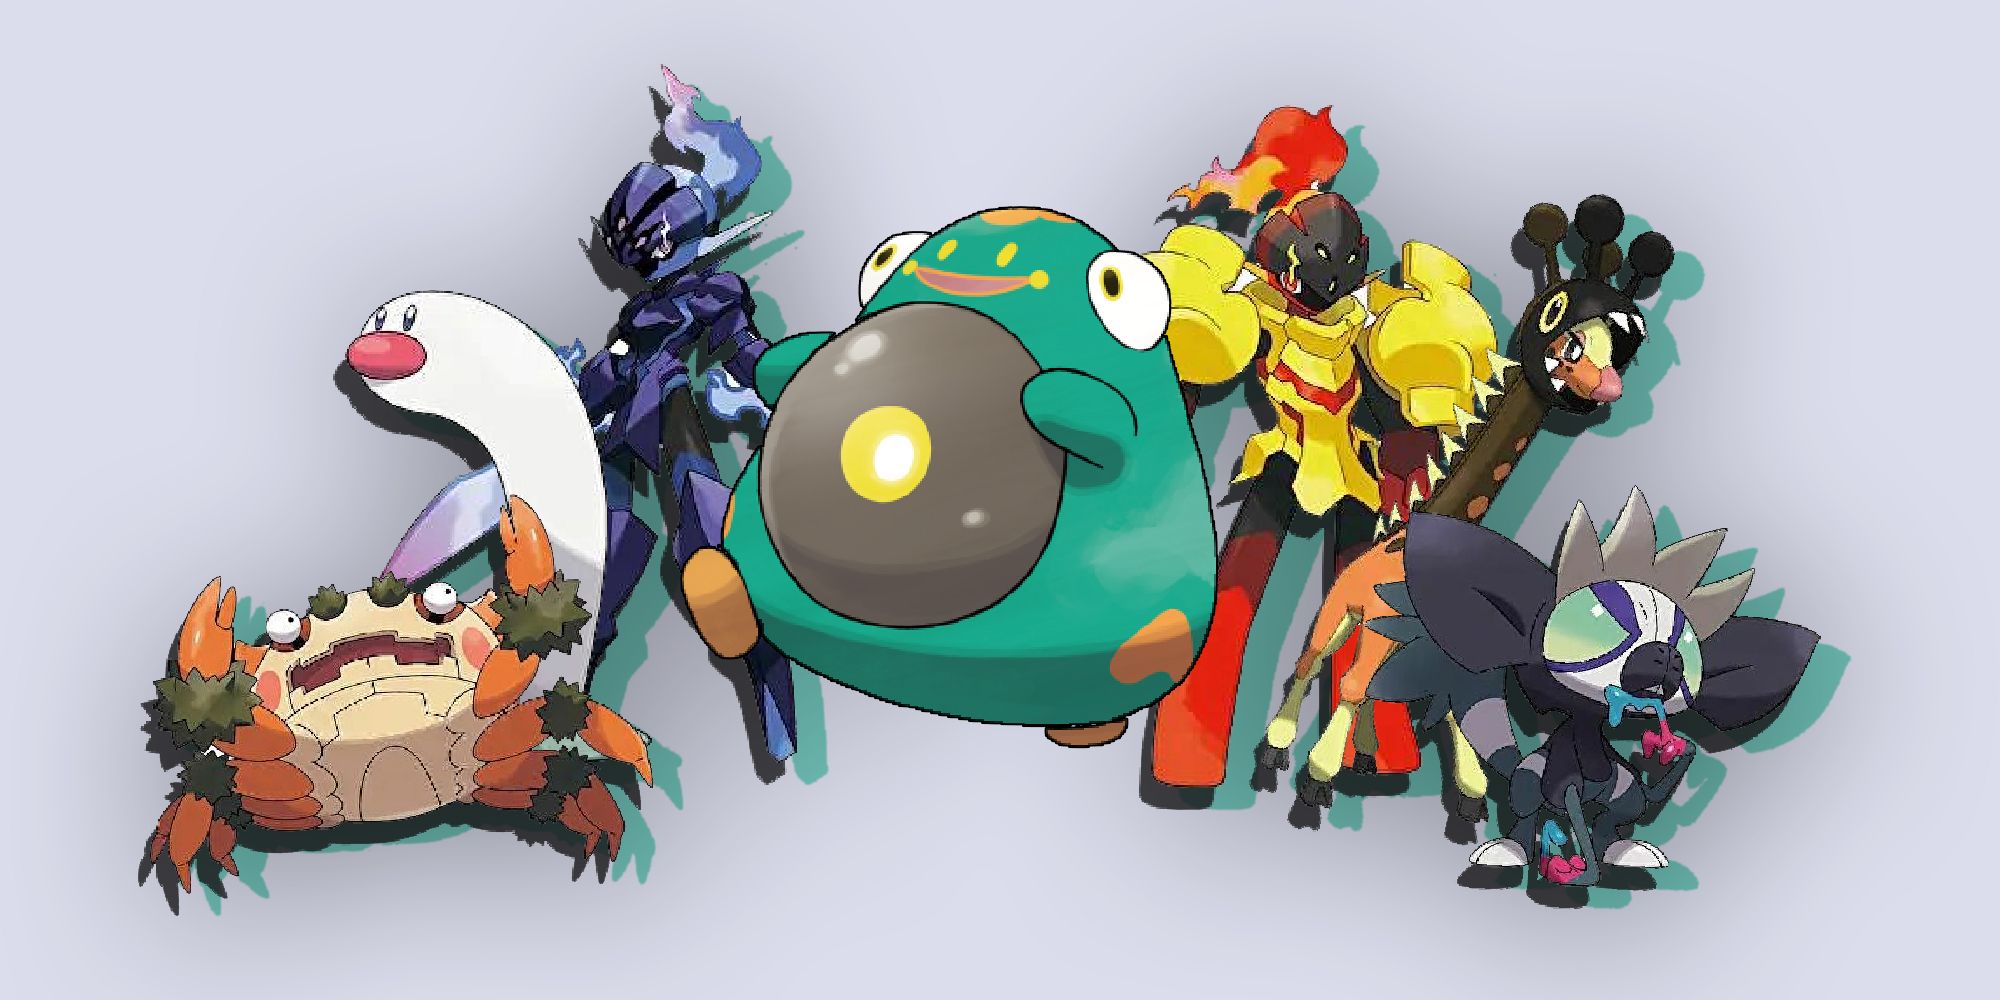 Generaci Ix Pokemon Pack Doble Modelos Sortidos